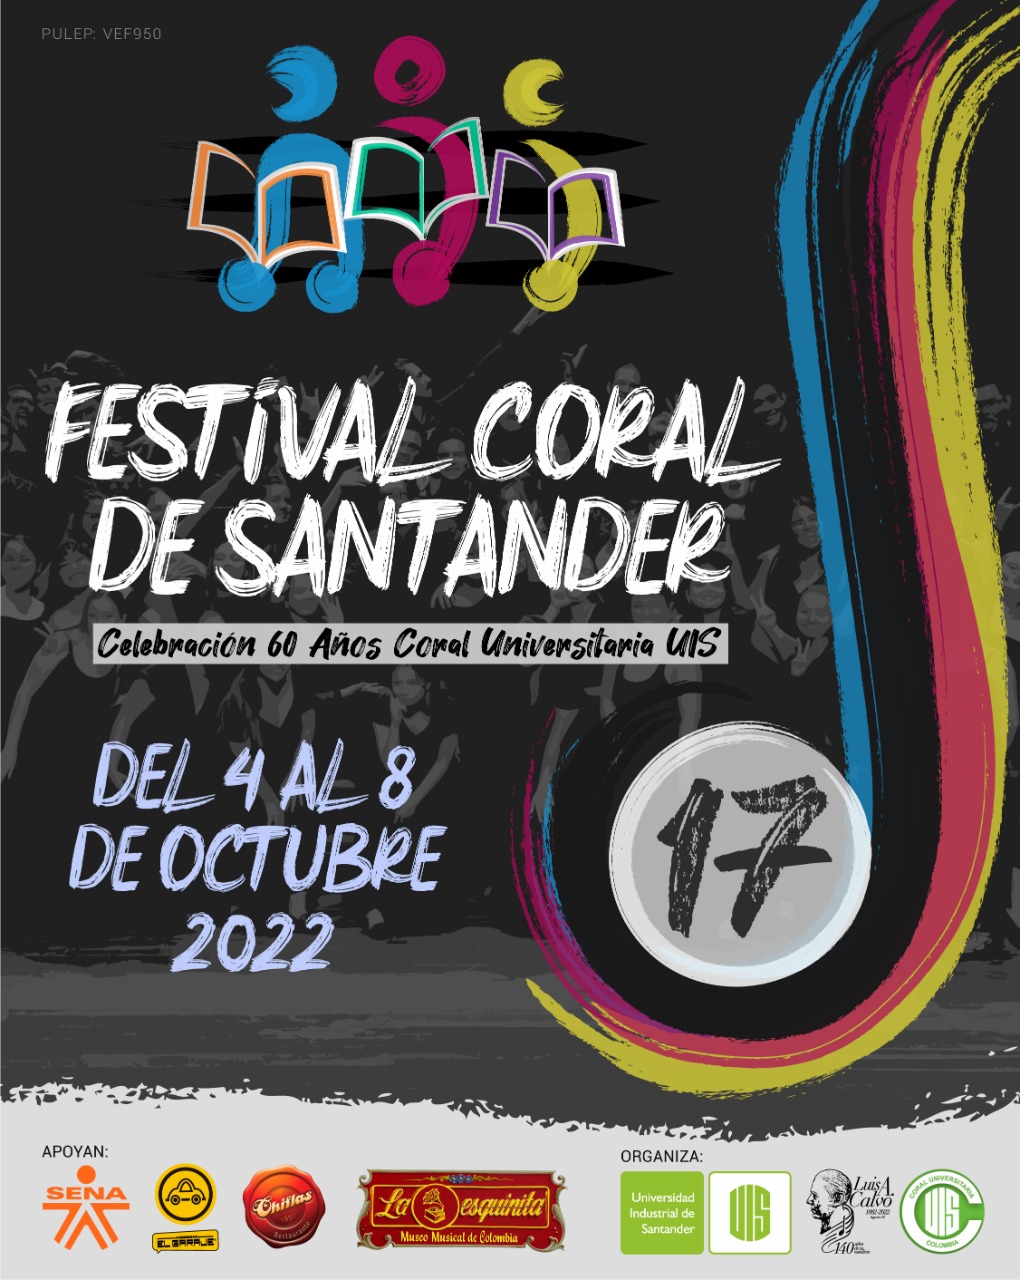 Afiche oficial del Festival Coral de Santander.